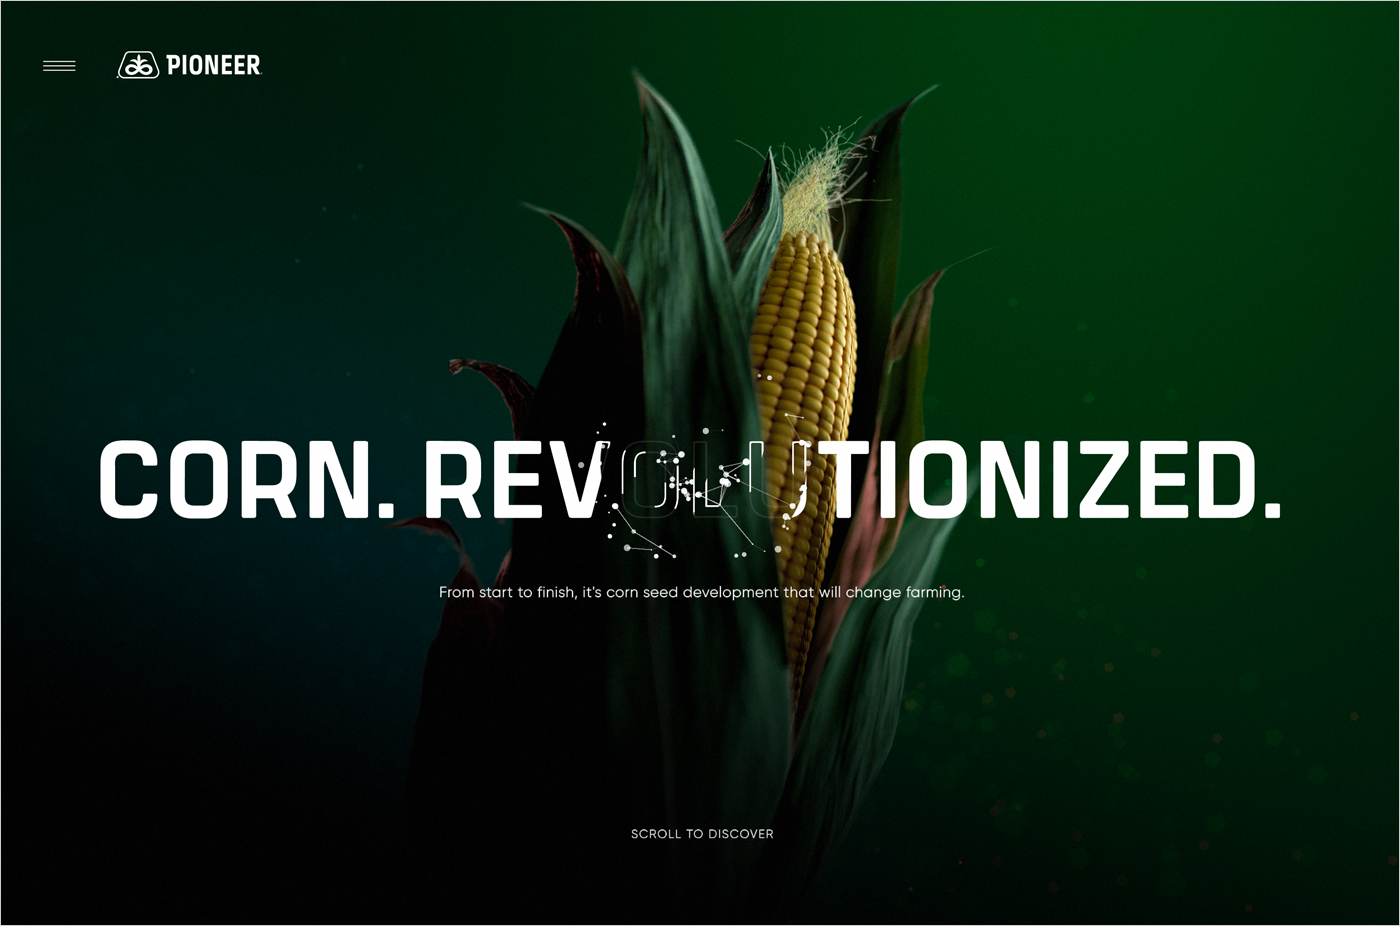 Pioneer – Corn. Revolutionized.ウェブサイトの画面キャプチャ画像